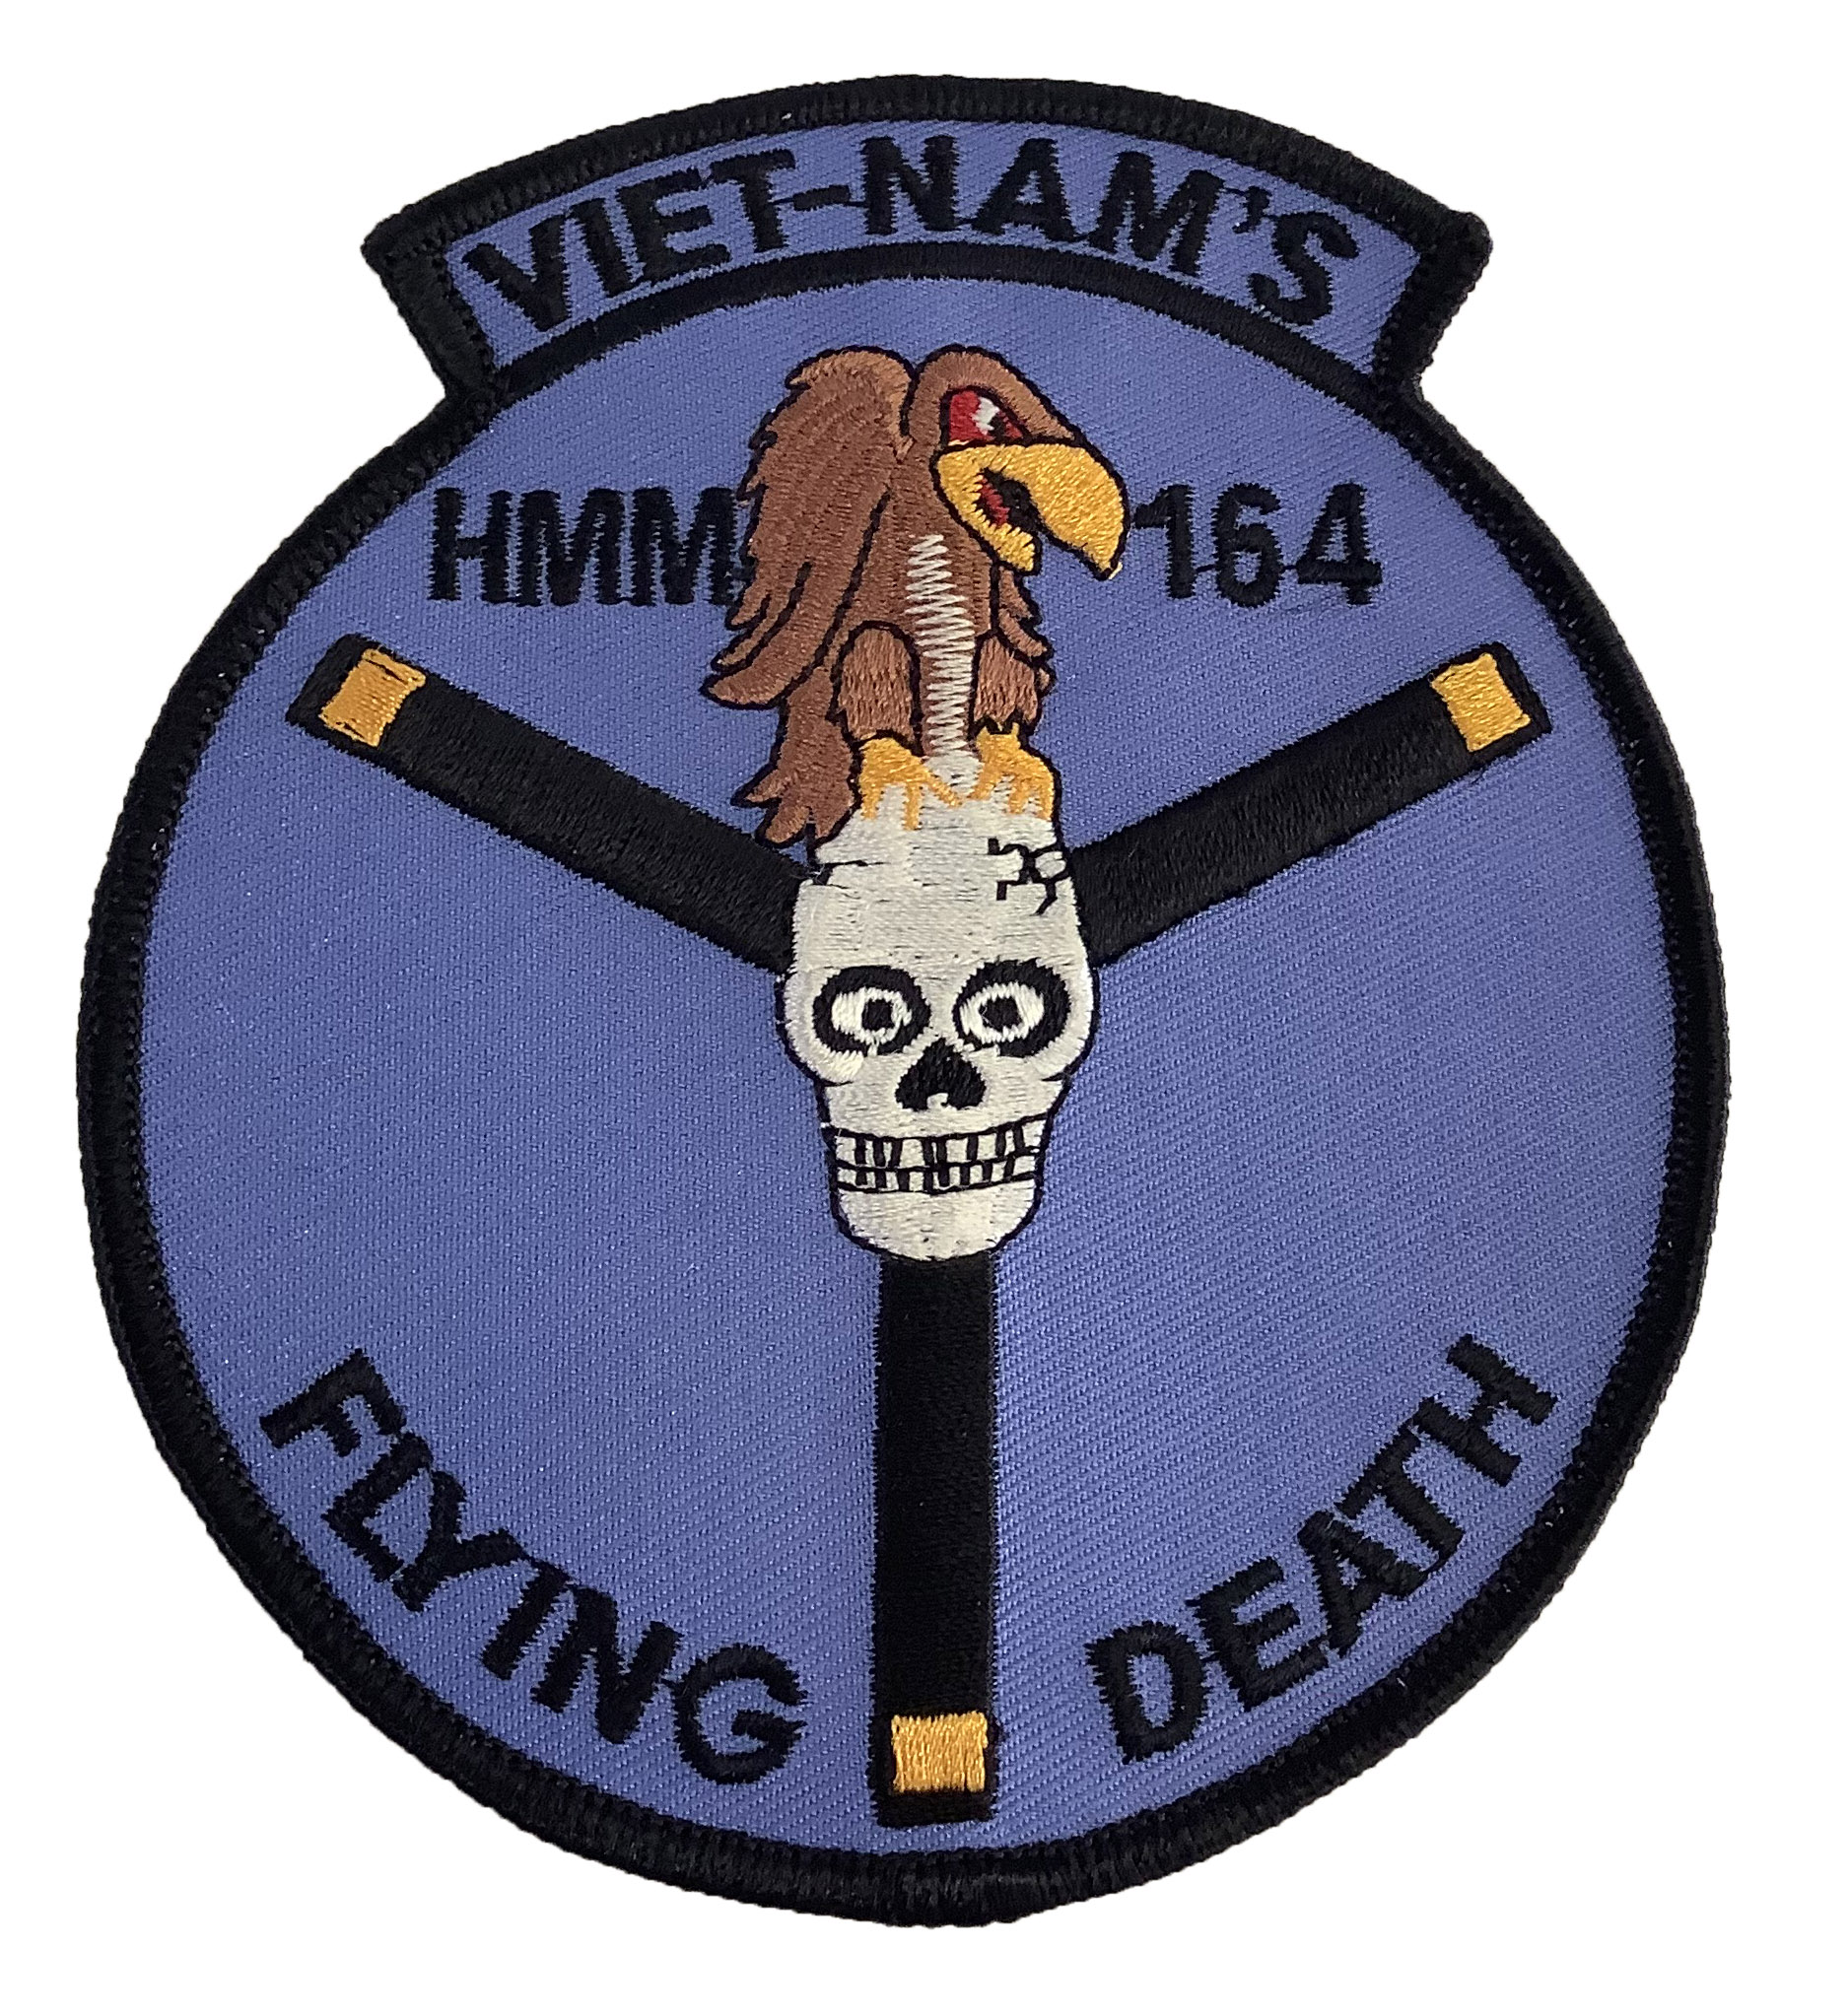 HMM-164 Viet Nam's Flying Death Patch – Sew on